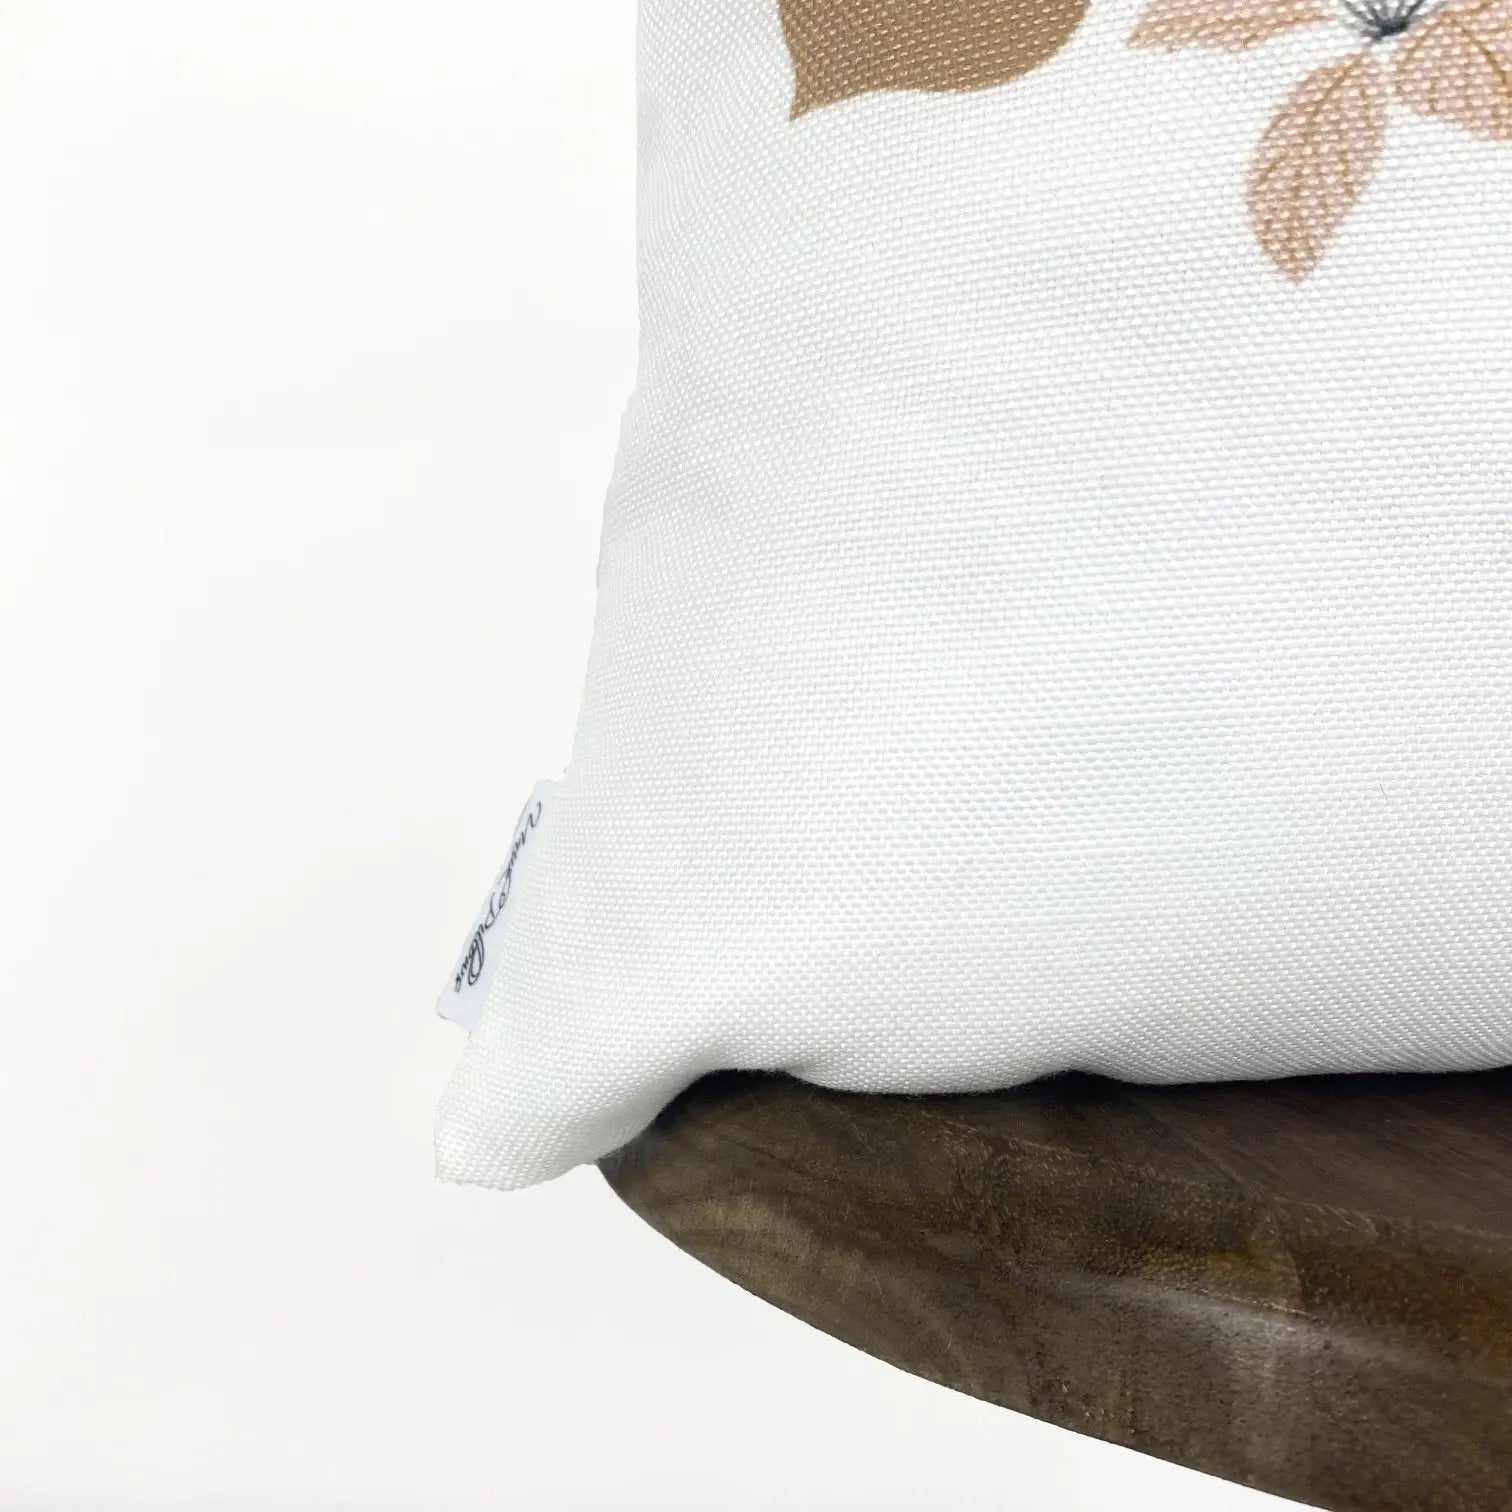 Leopard Face | Leopard Decor | Leopard Print | Leaves | Decorative Pillows | Mom Gift | Home Decor | Room Decor | Bedroom Decor | Throw Pillows 